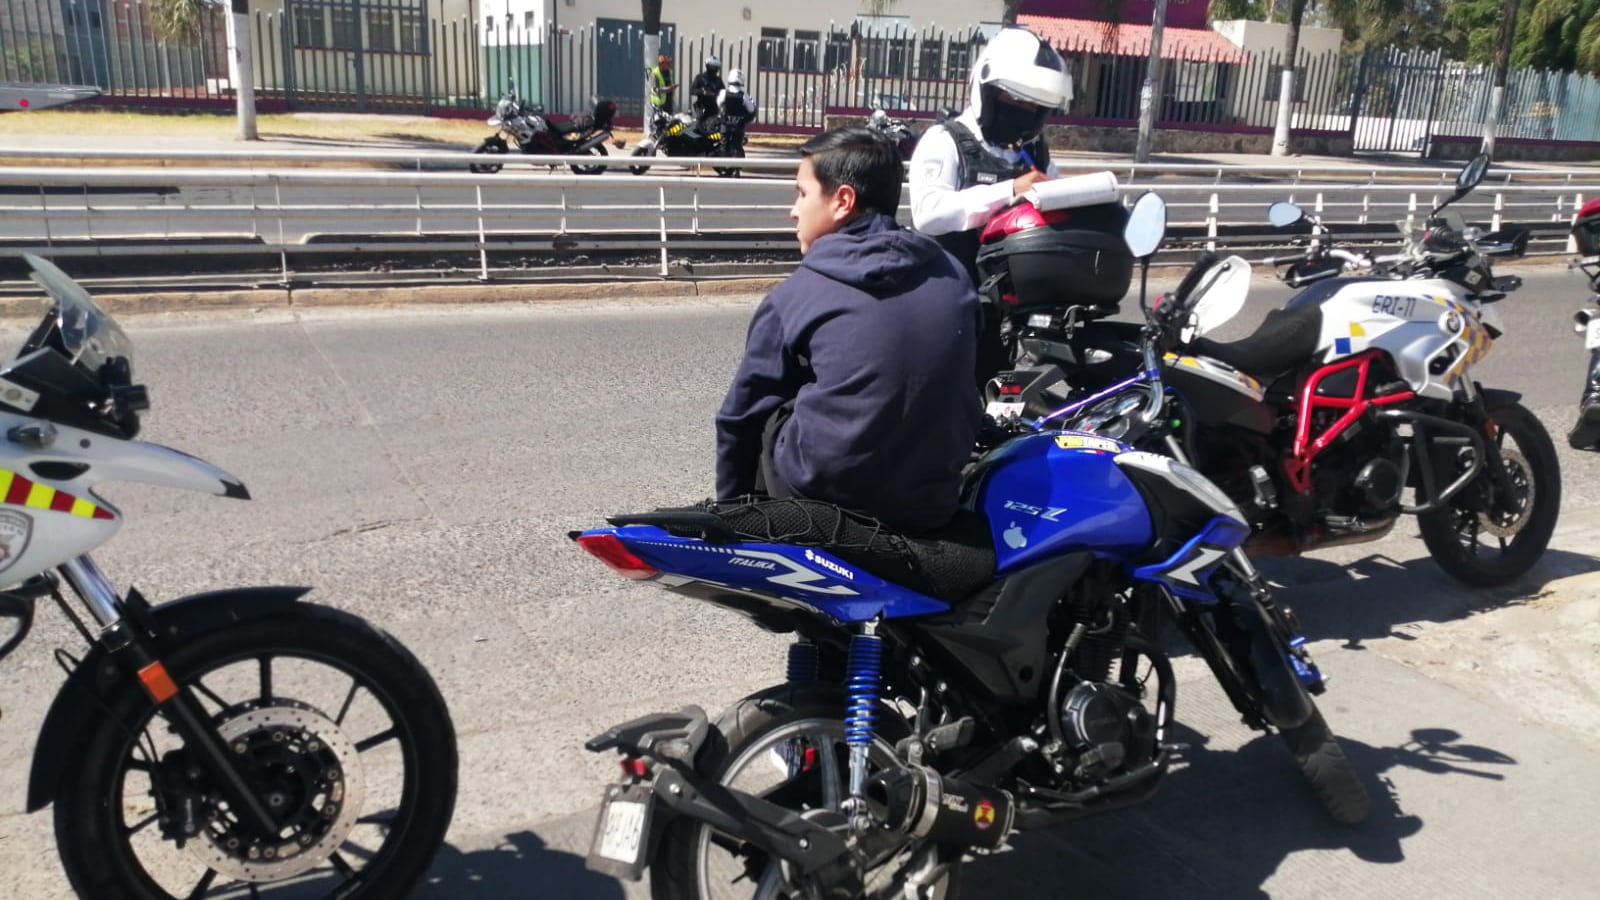 En promedio al mes se emiten 35 multas a motociclistas por transitan por lugares prohibidos como ciclovías o aceras.